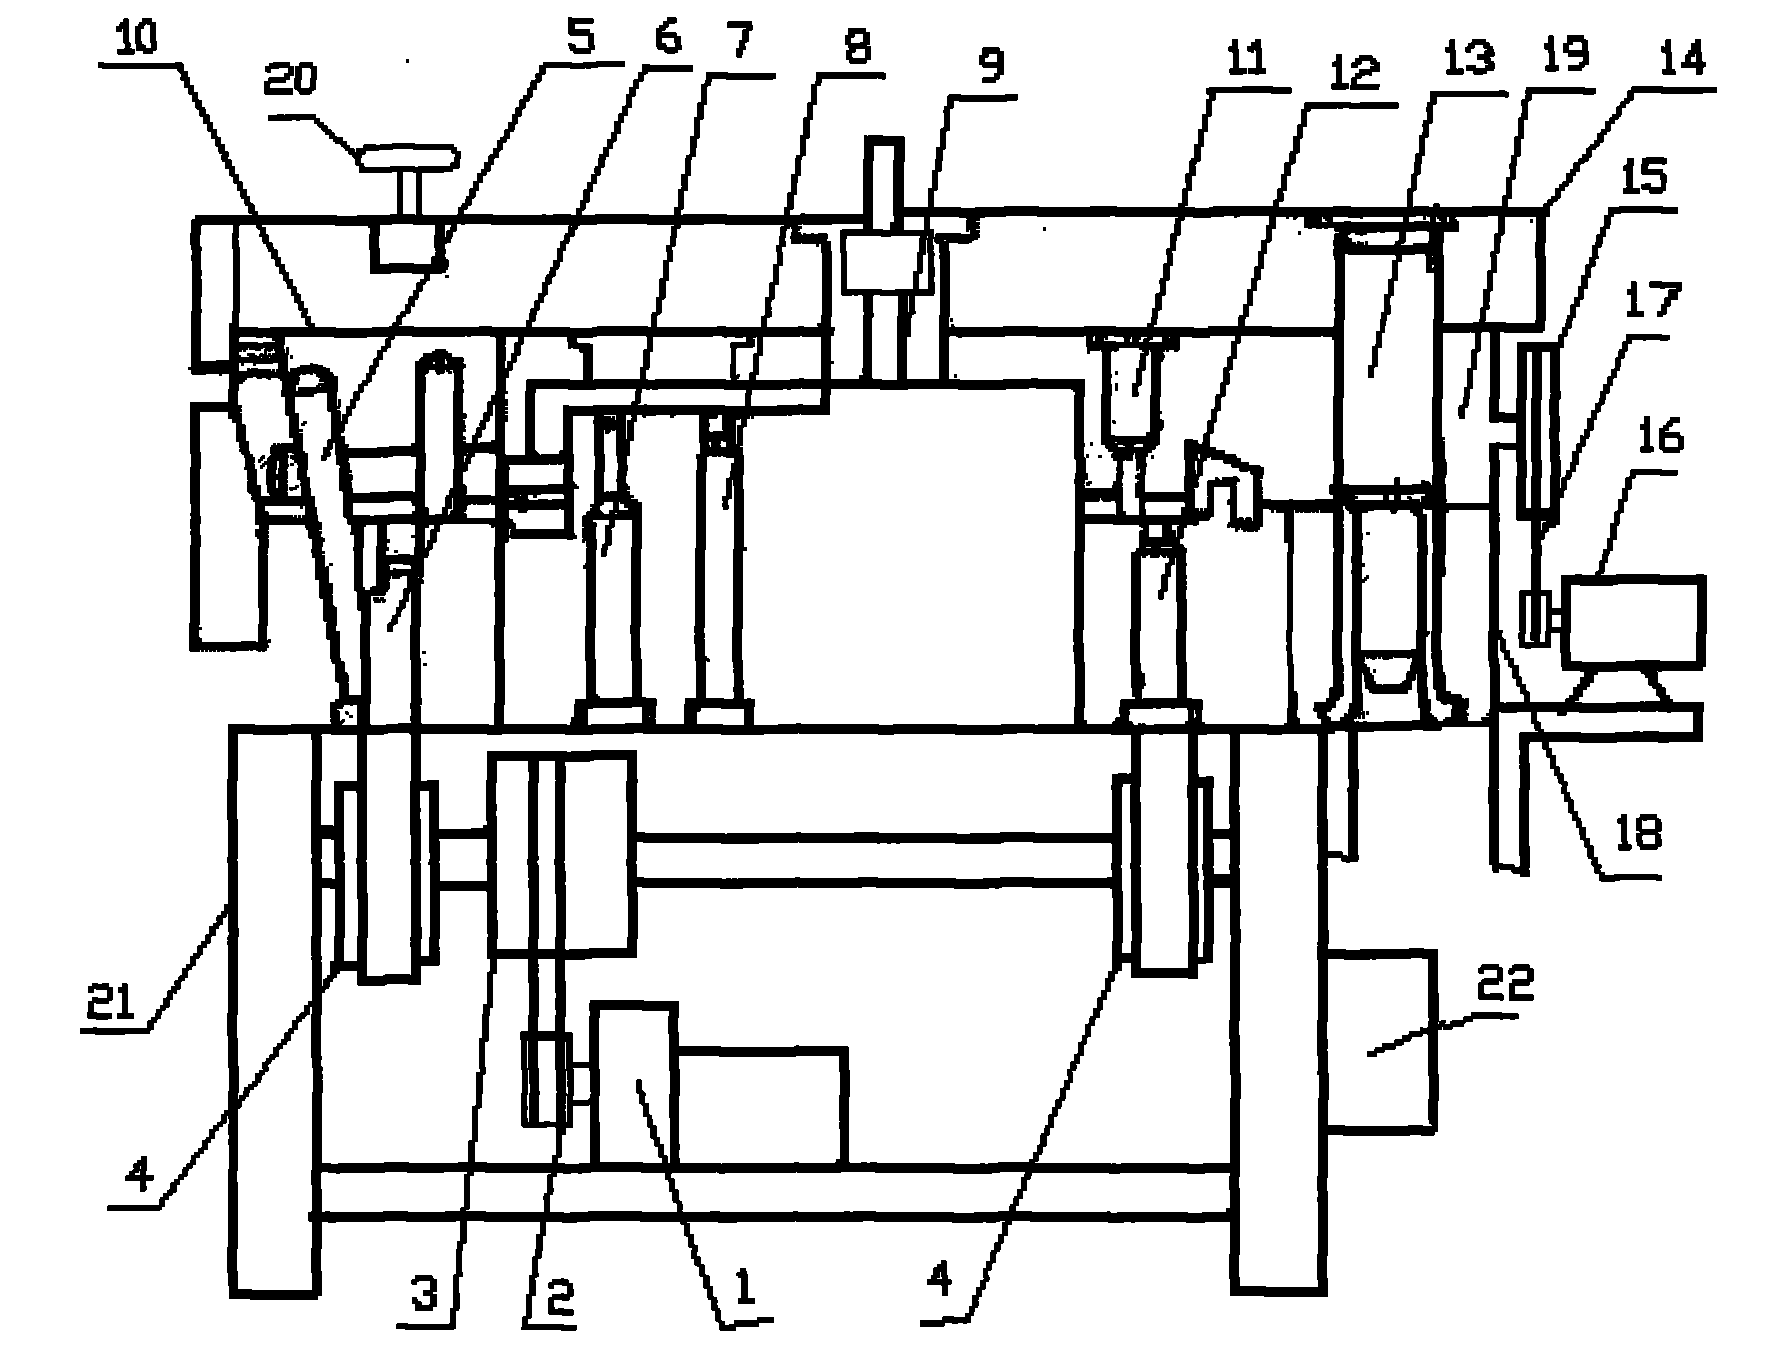 Novel automatic feed plate cutting mechanism